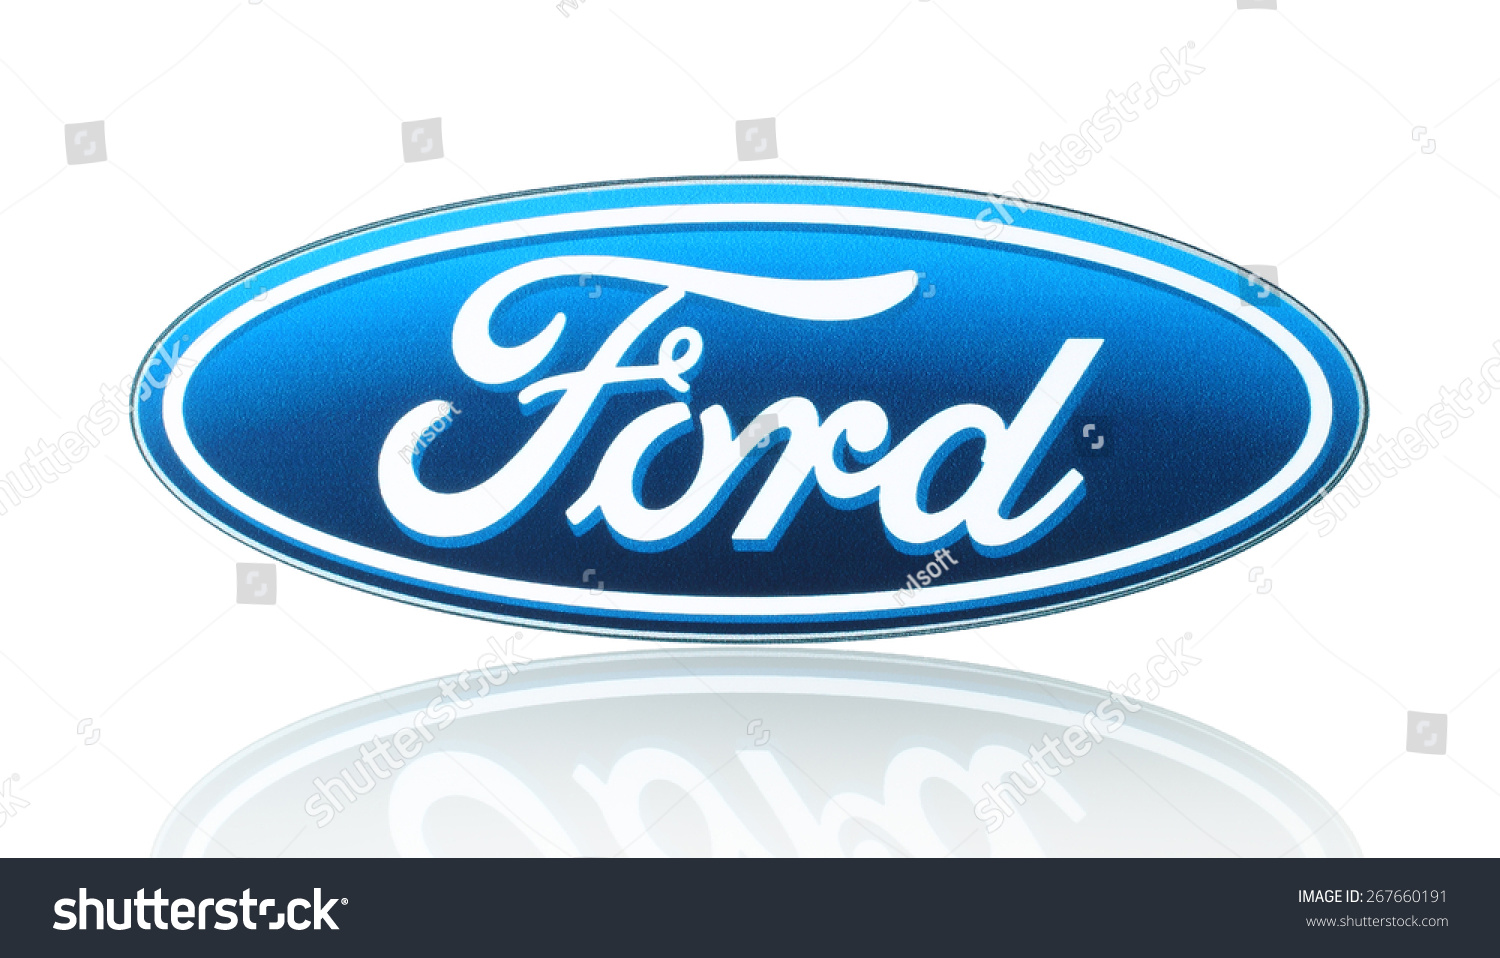 Ford kiev ukraine #8